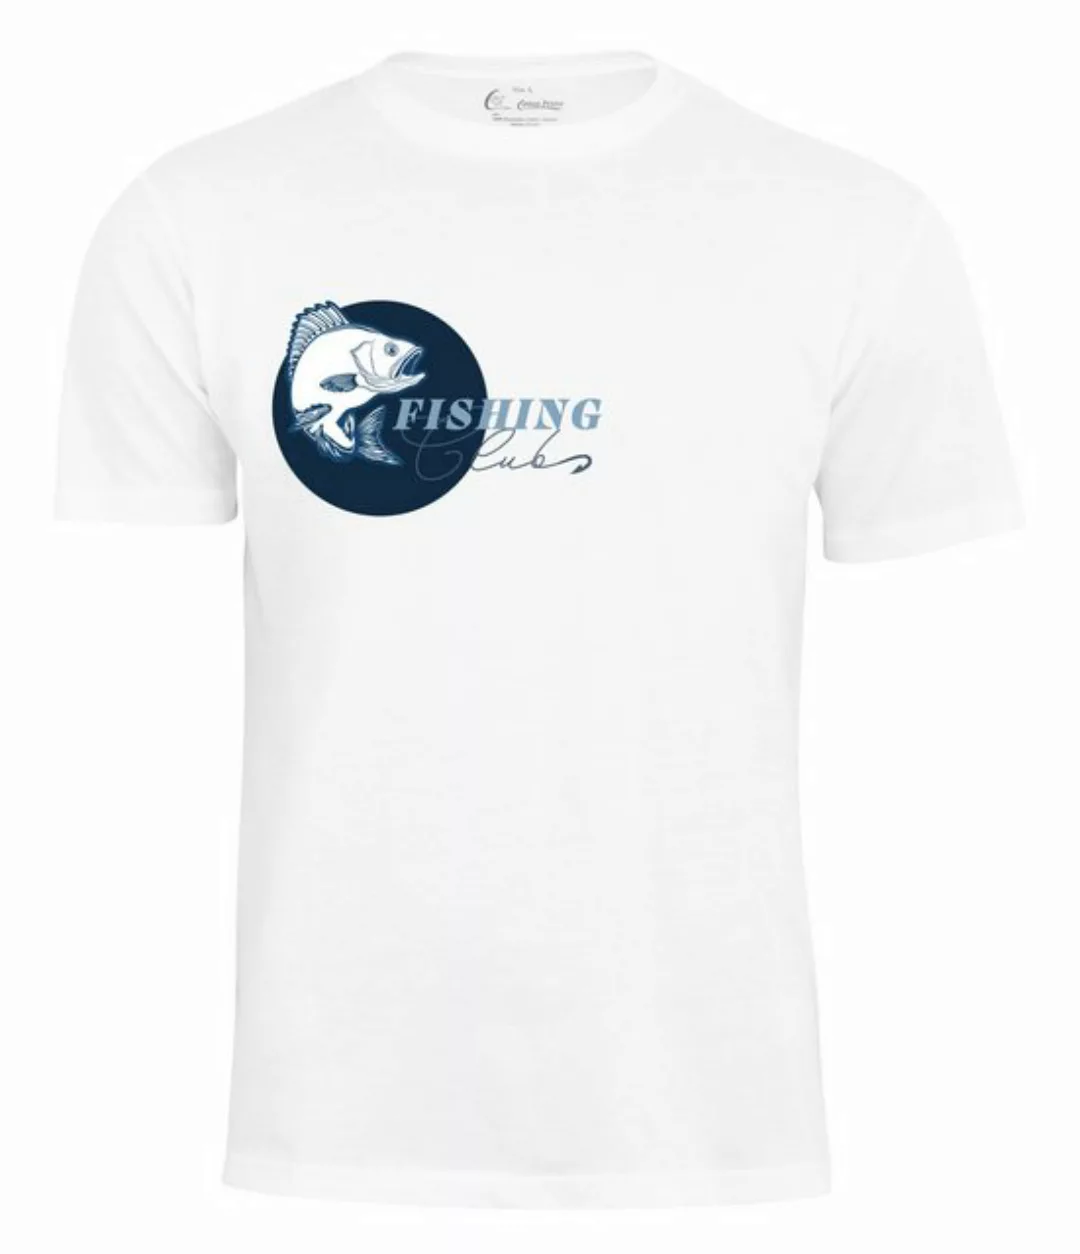 Cotton Prime® T-Shirt Fishing Club - Angler-Shirt günstig online kaufen